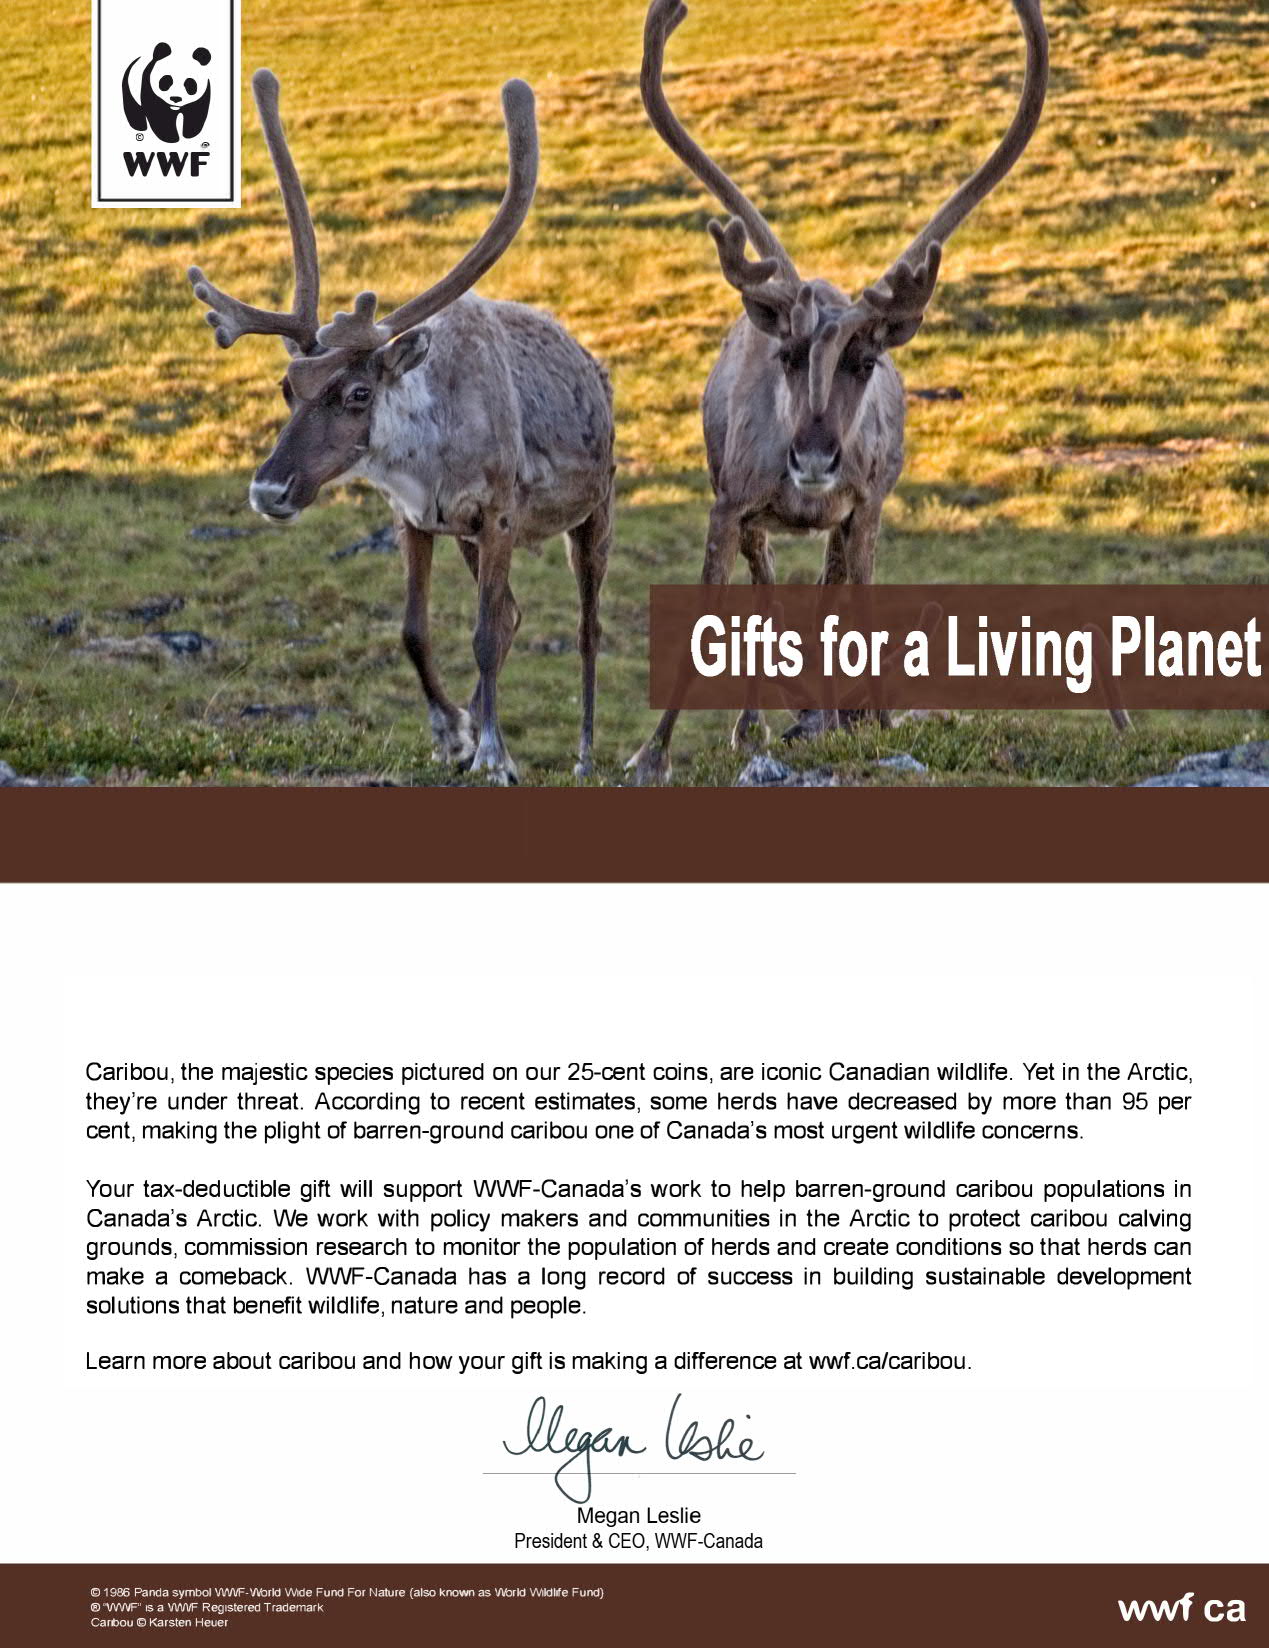 ensure Arctic caribou thrive - WWF-Canada